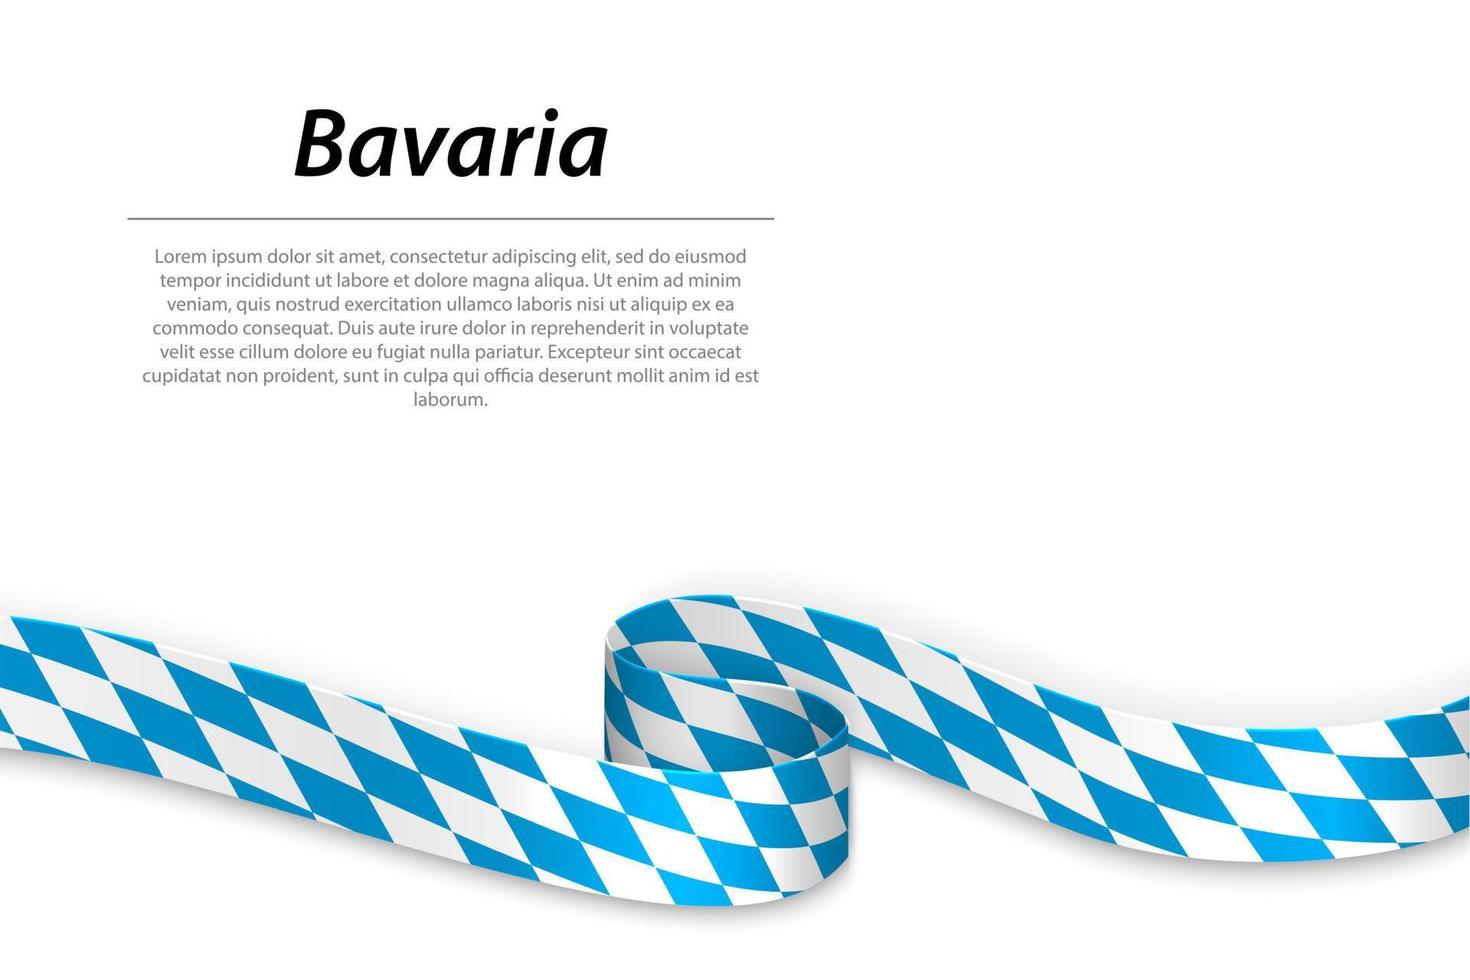 Waving ribbon or banner with flag of Bavaria vector